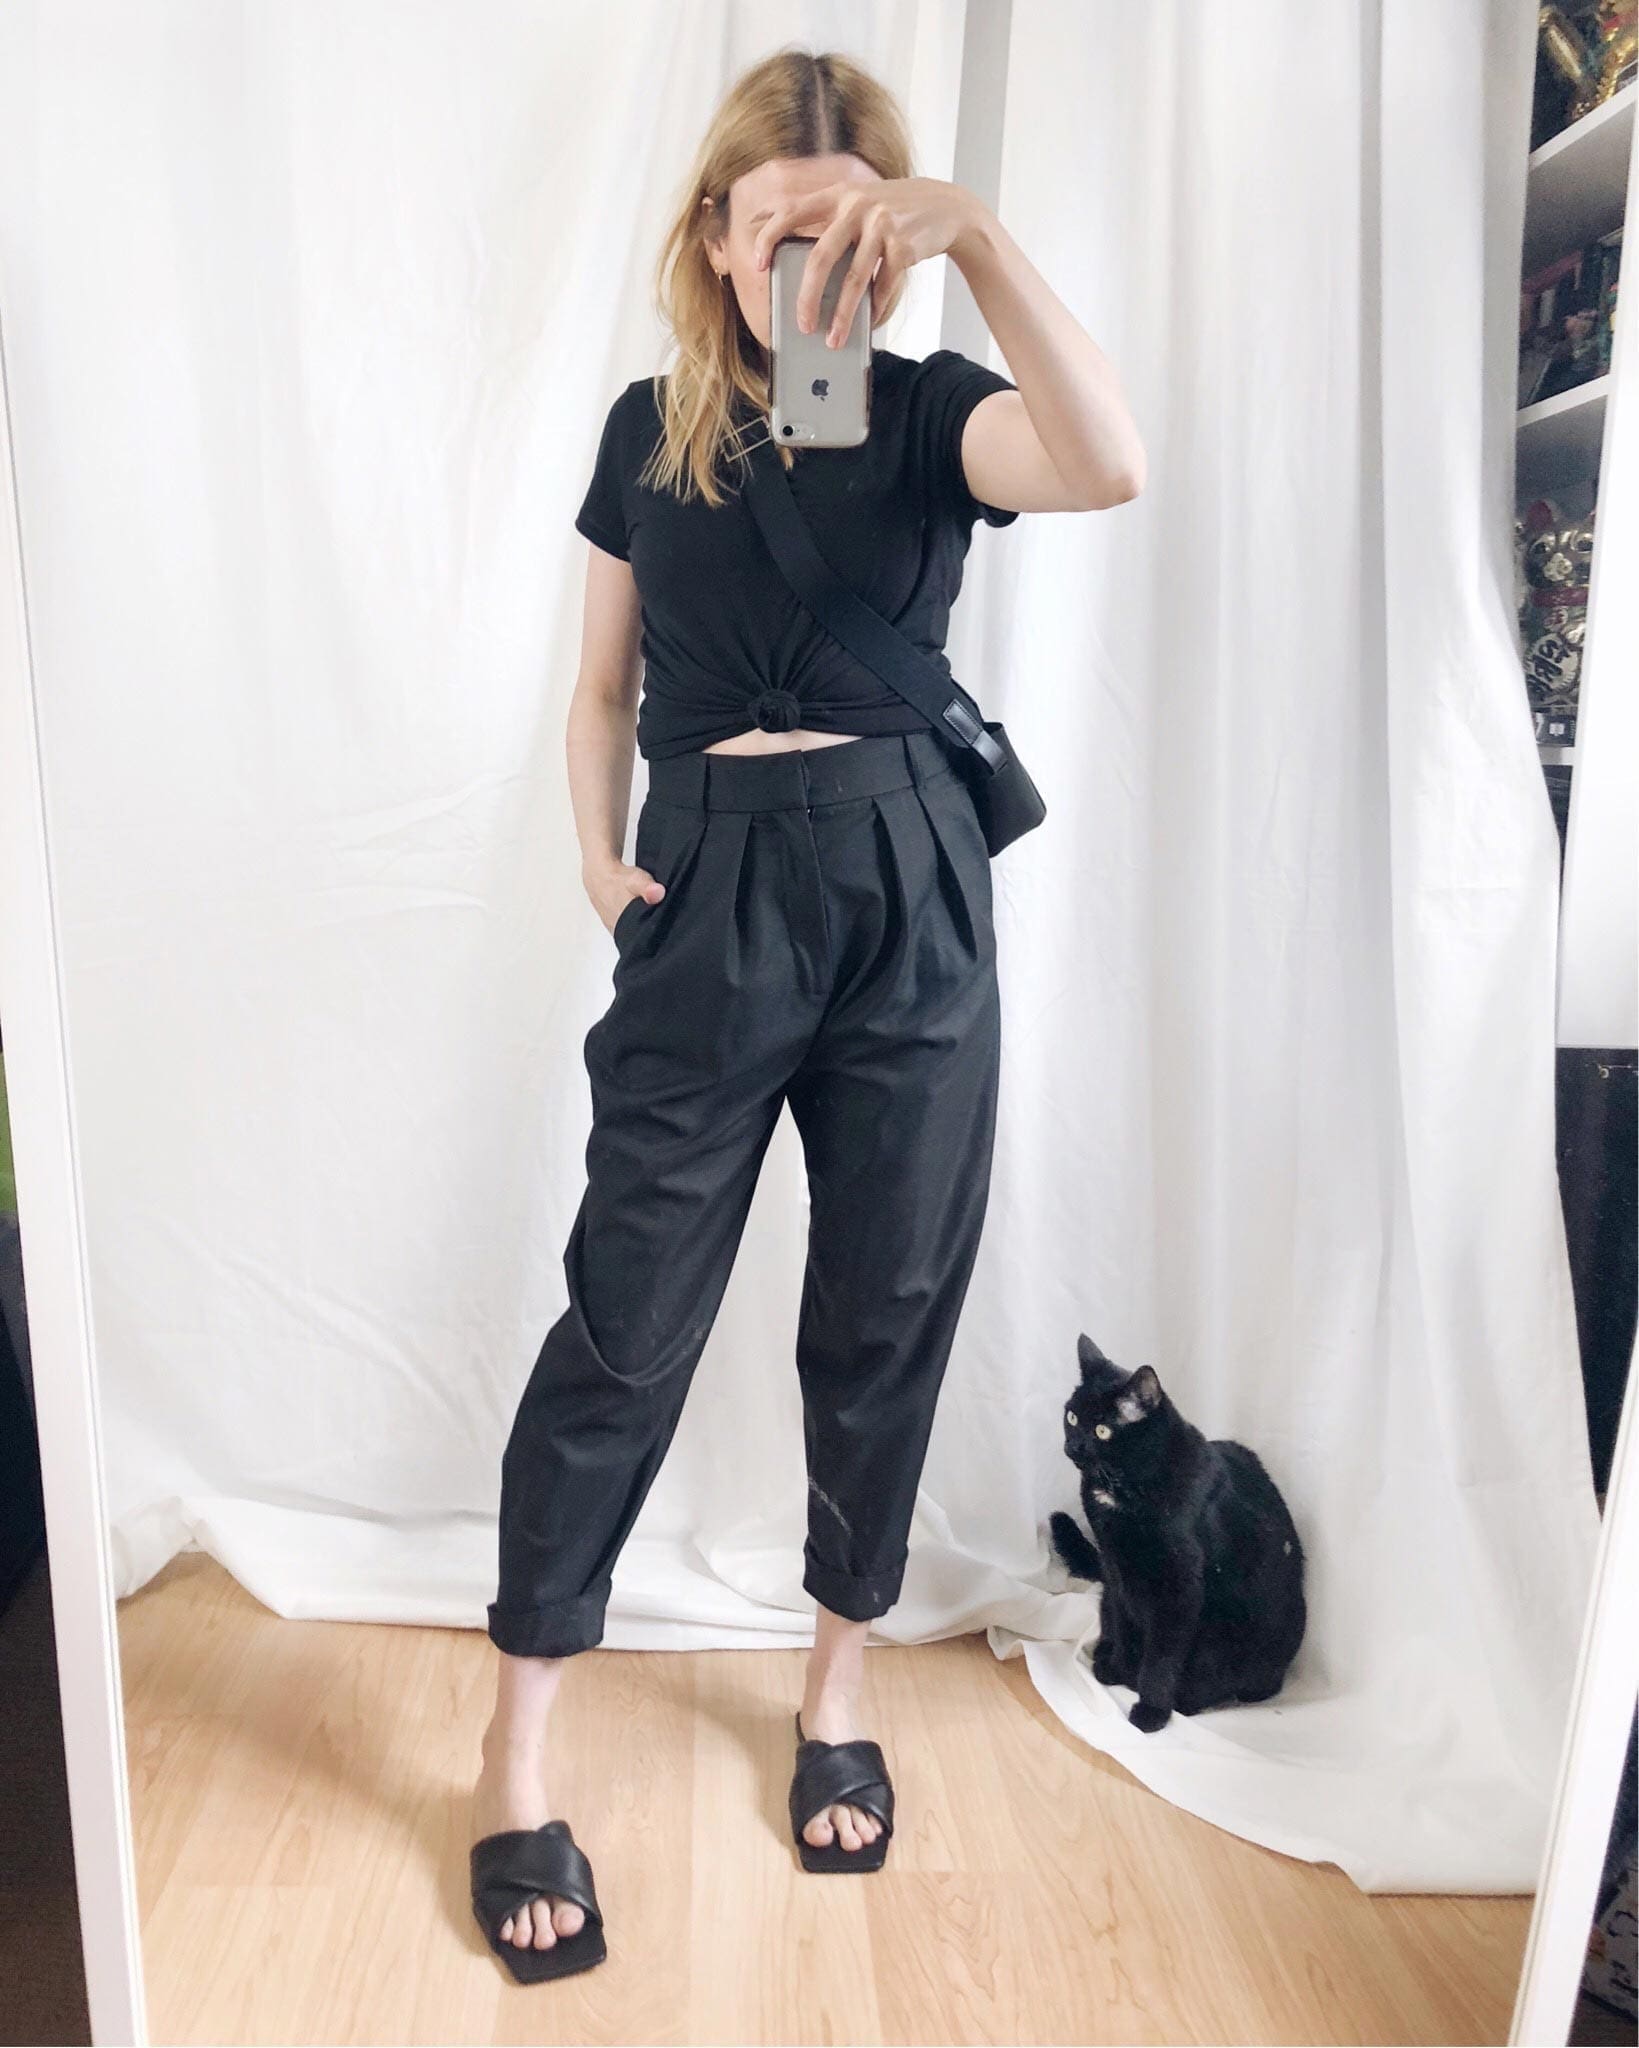 Styling My Shape - Interview with Fashion Blogger Sara Watson